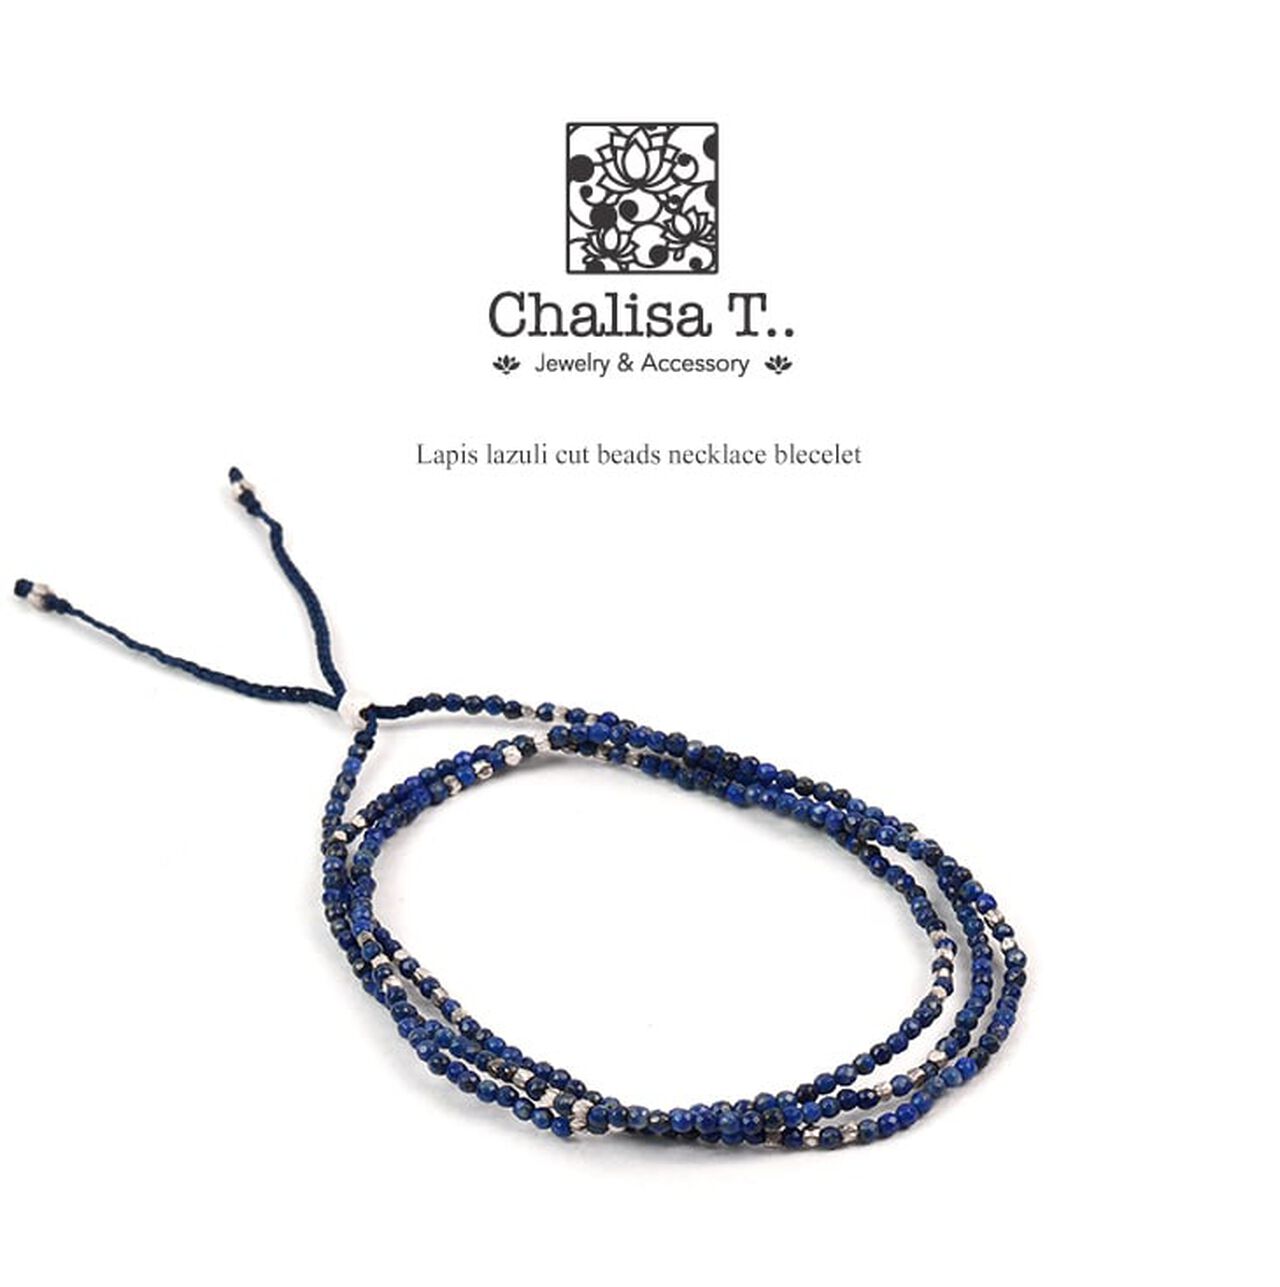 Lapis lazuli 2mm cut beads 2 way accessory necklace / bracelet,, large image number 1